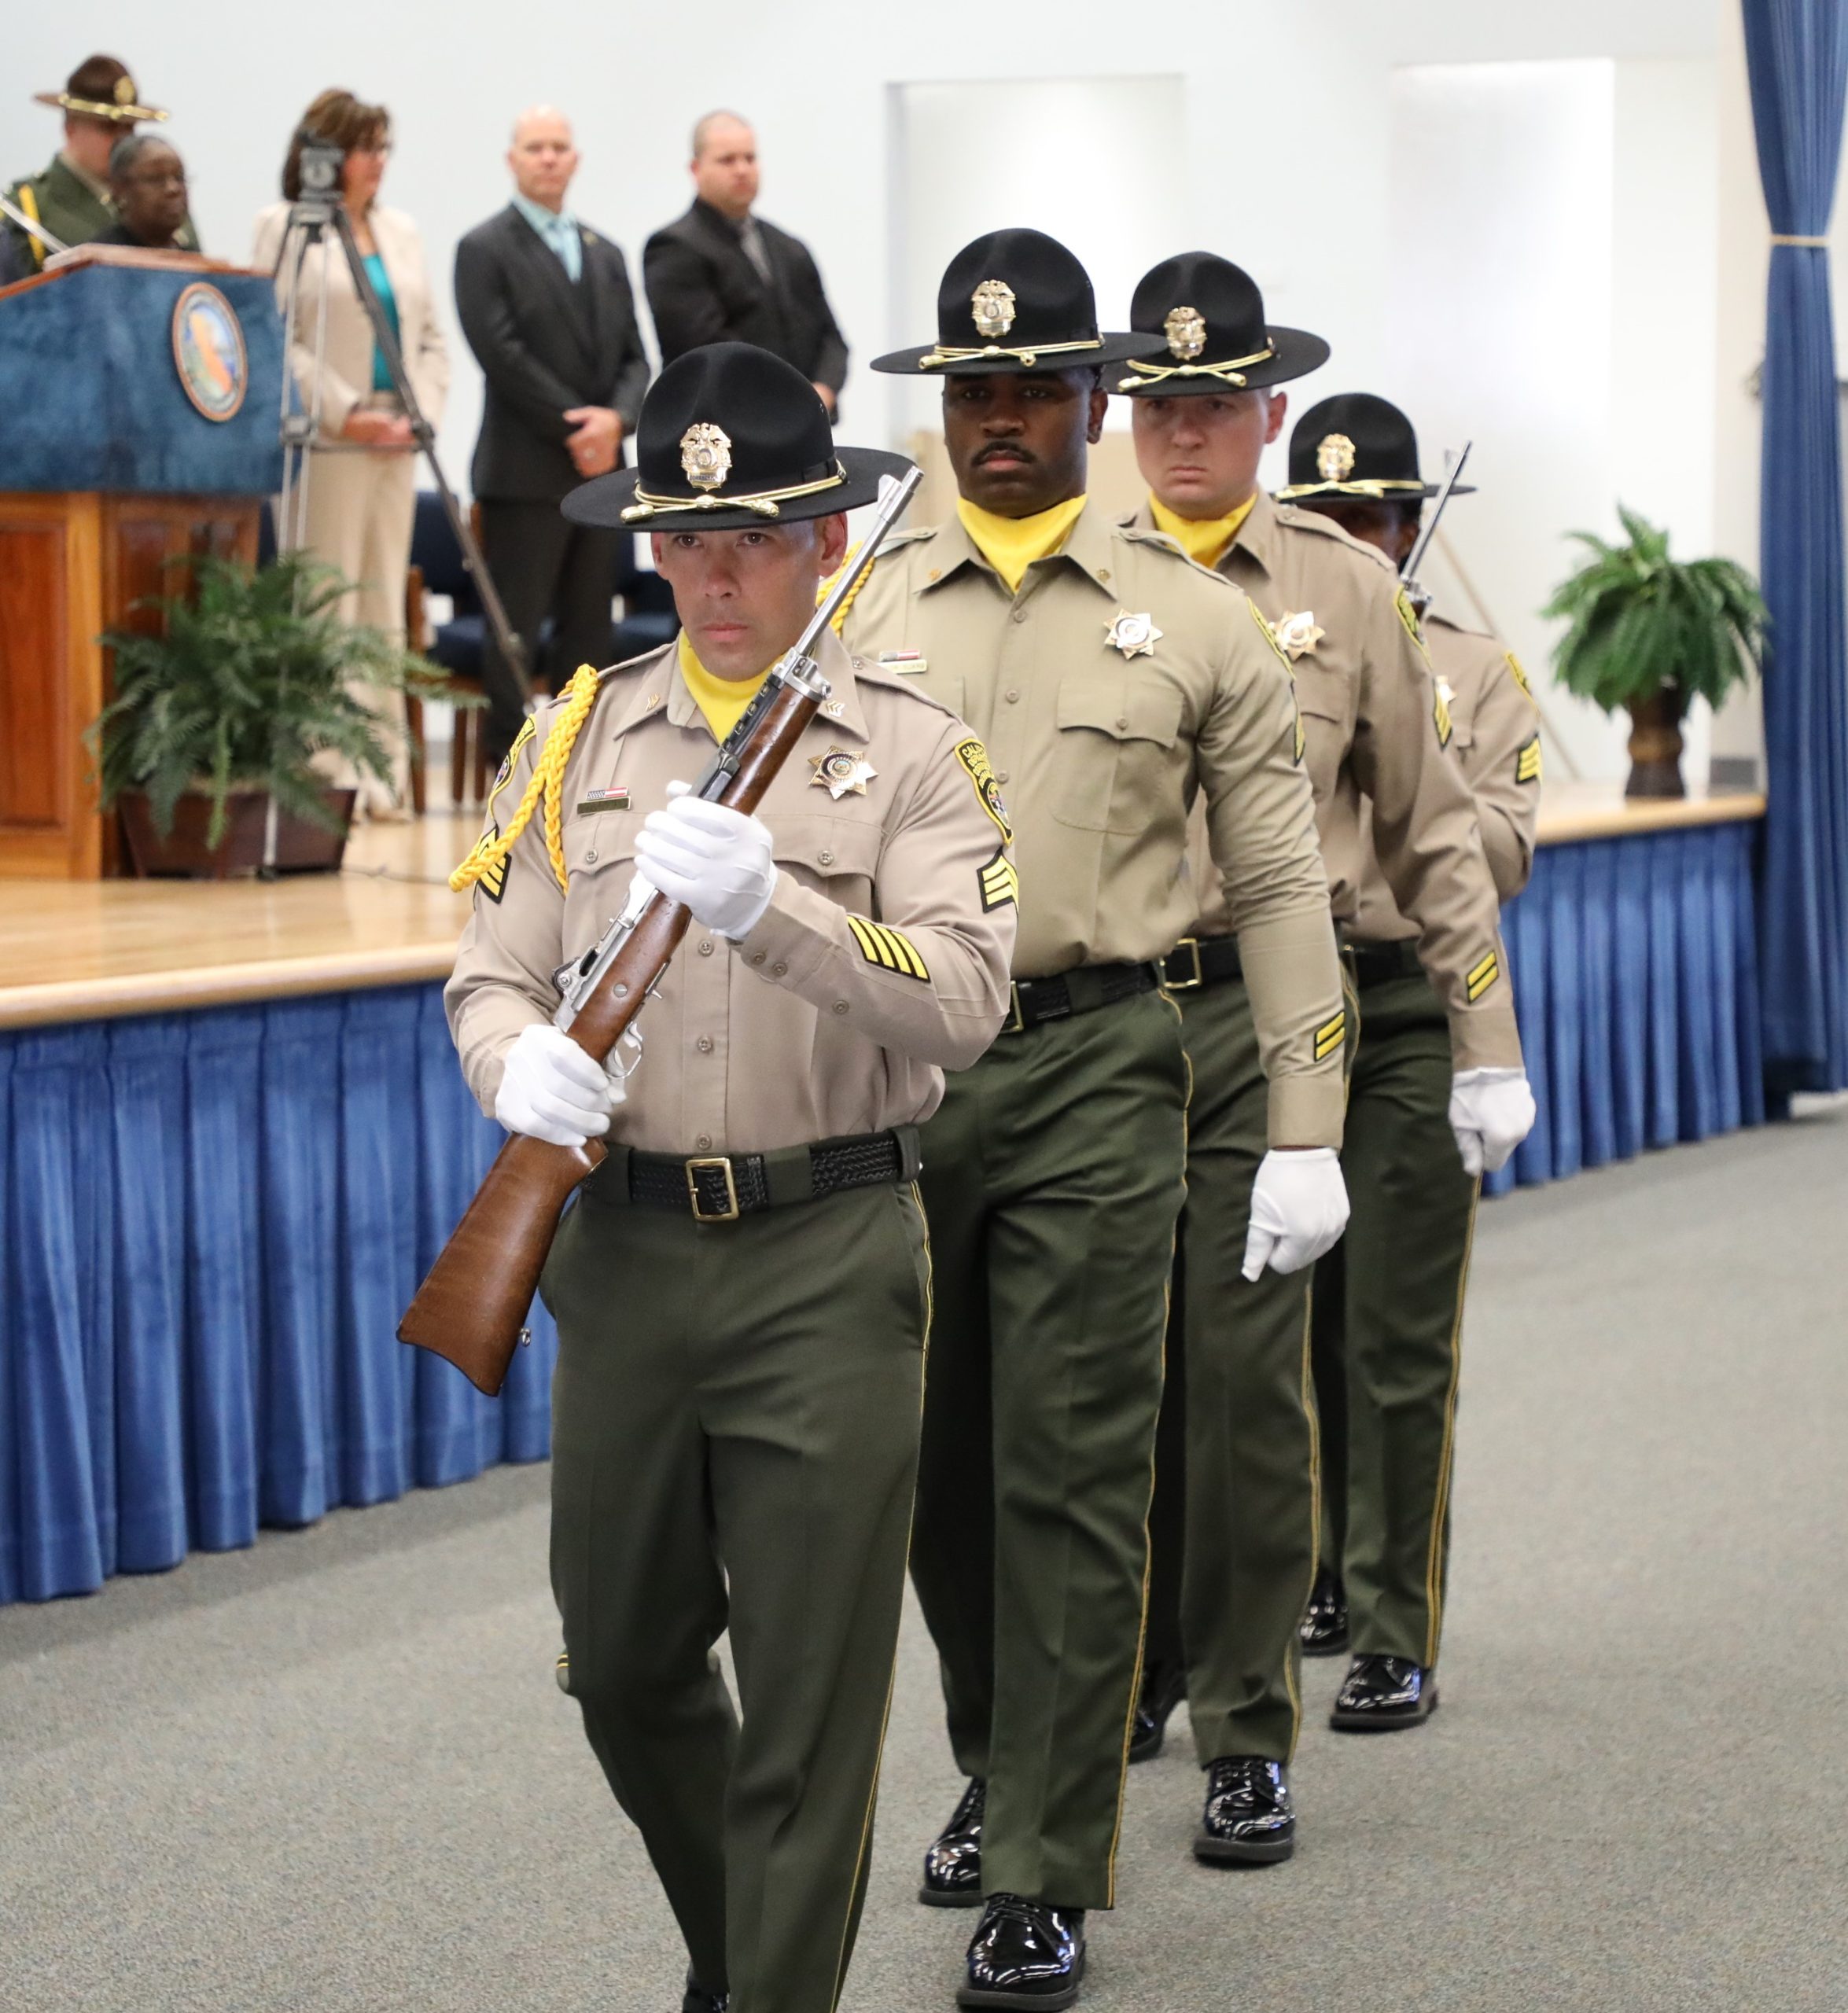 Four honor guard correctional sergeants walk into room.